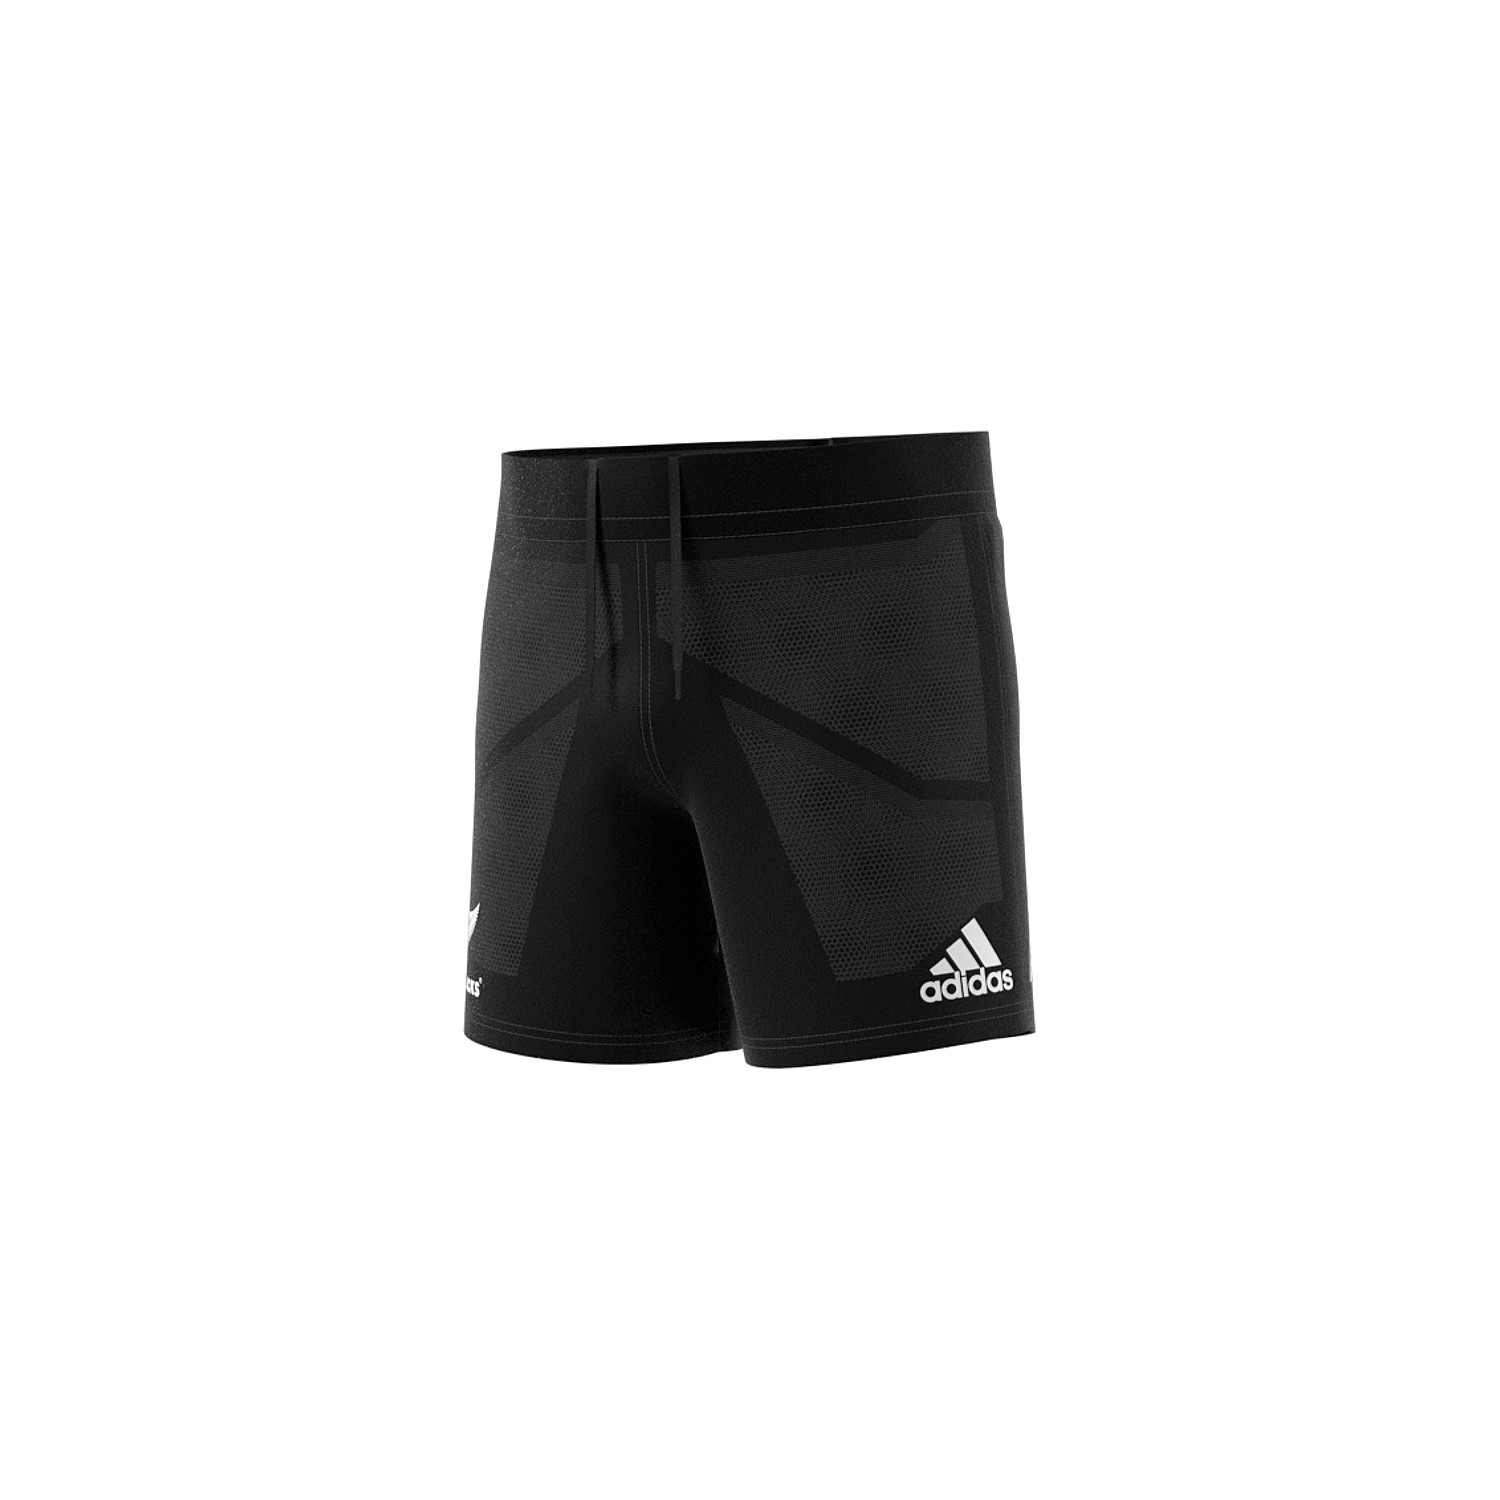 Stirling Sports - All Blacks Home Shorts